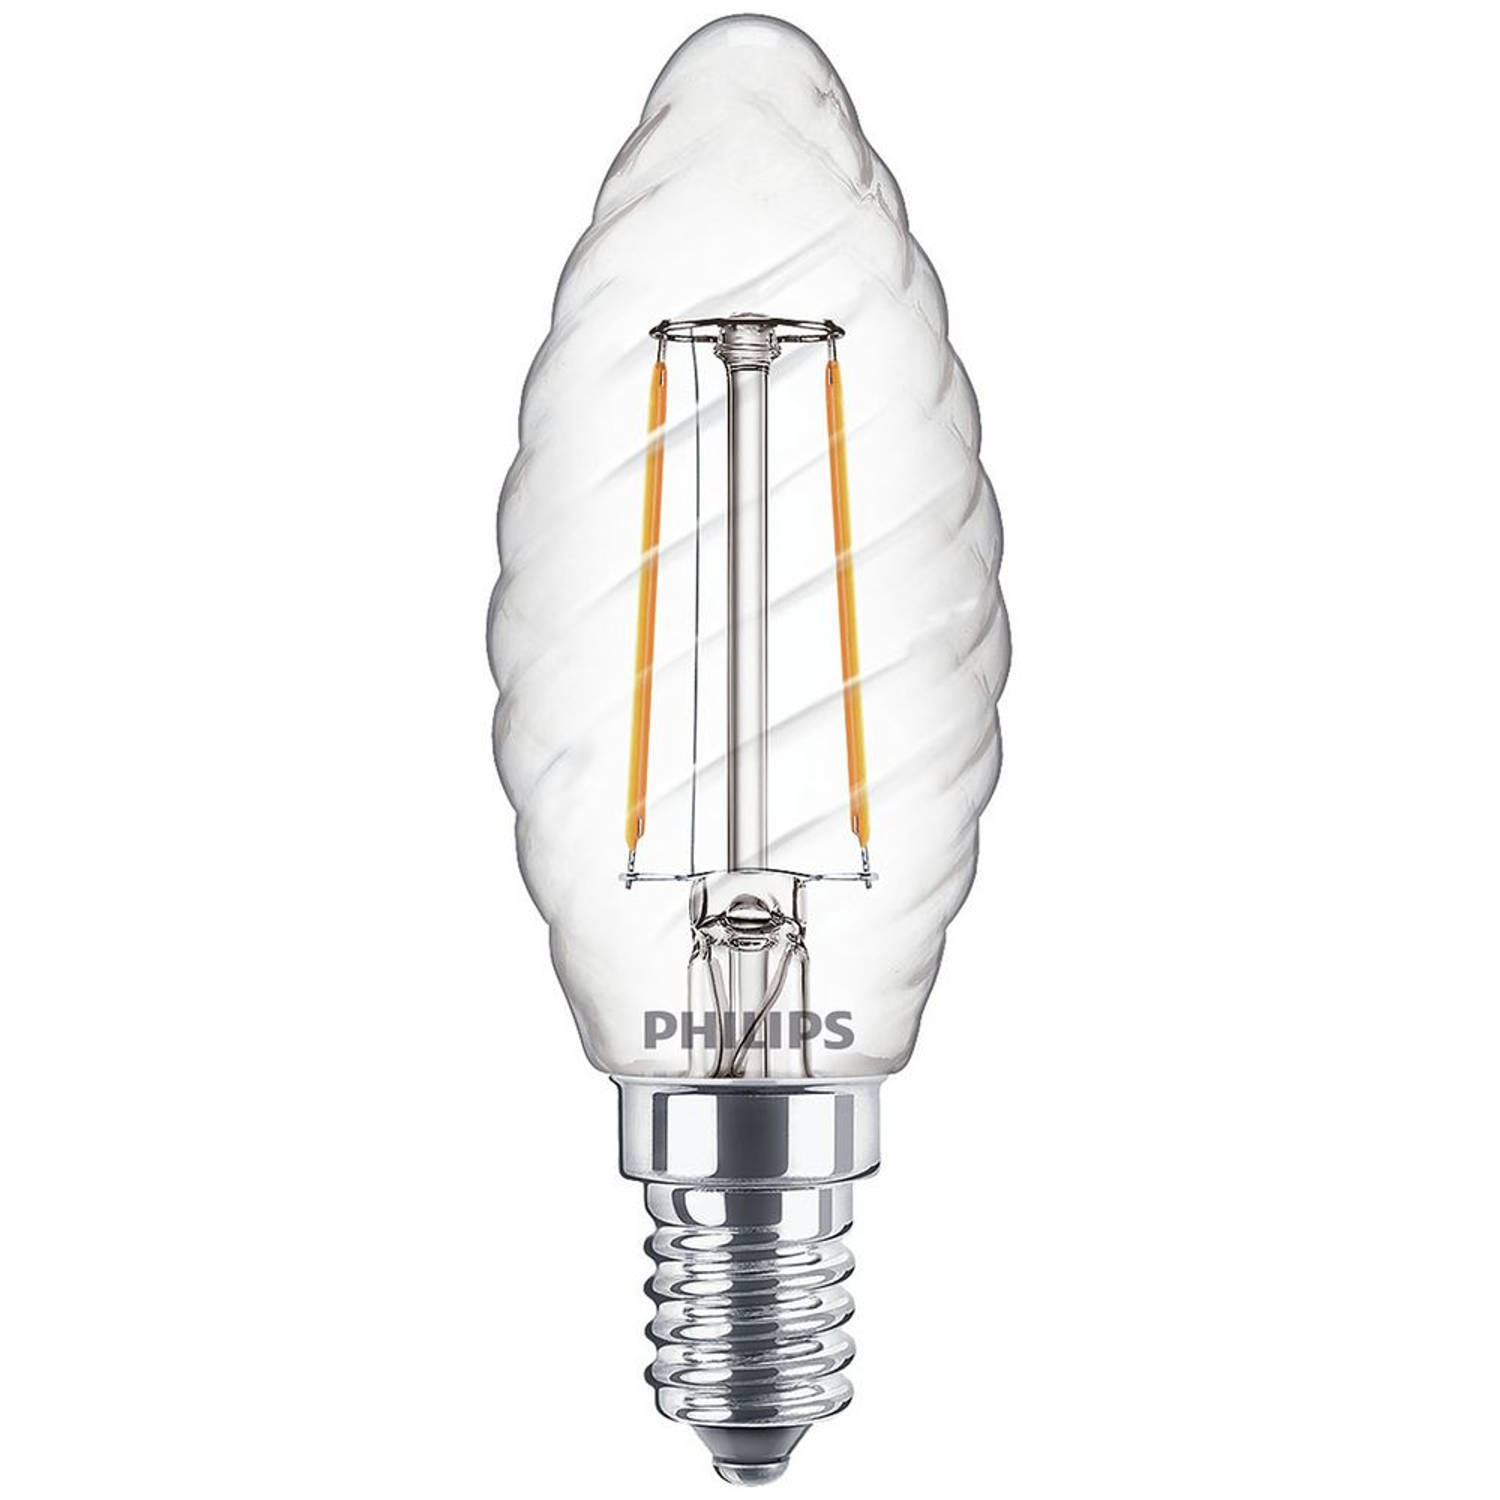 Philips 2099762353 LED lamp E14 2W 250Lm kaars filament gedraaid online kopen